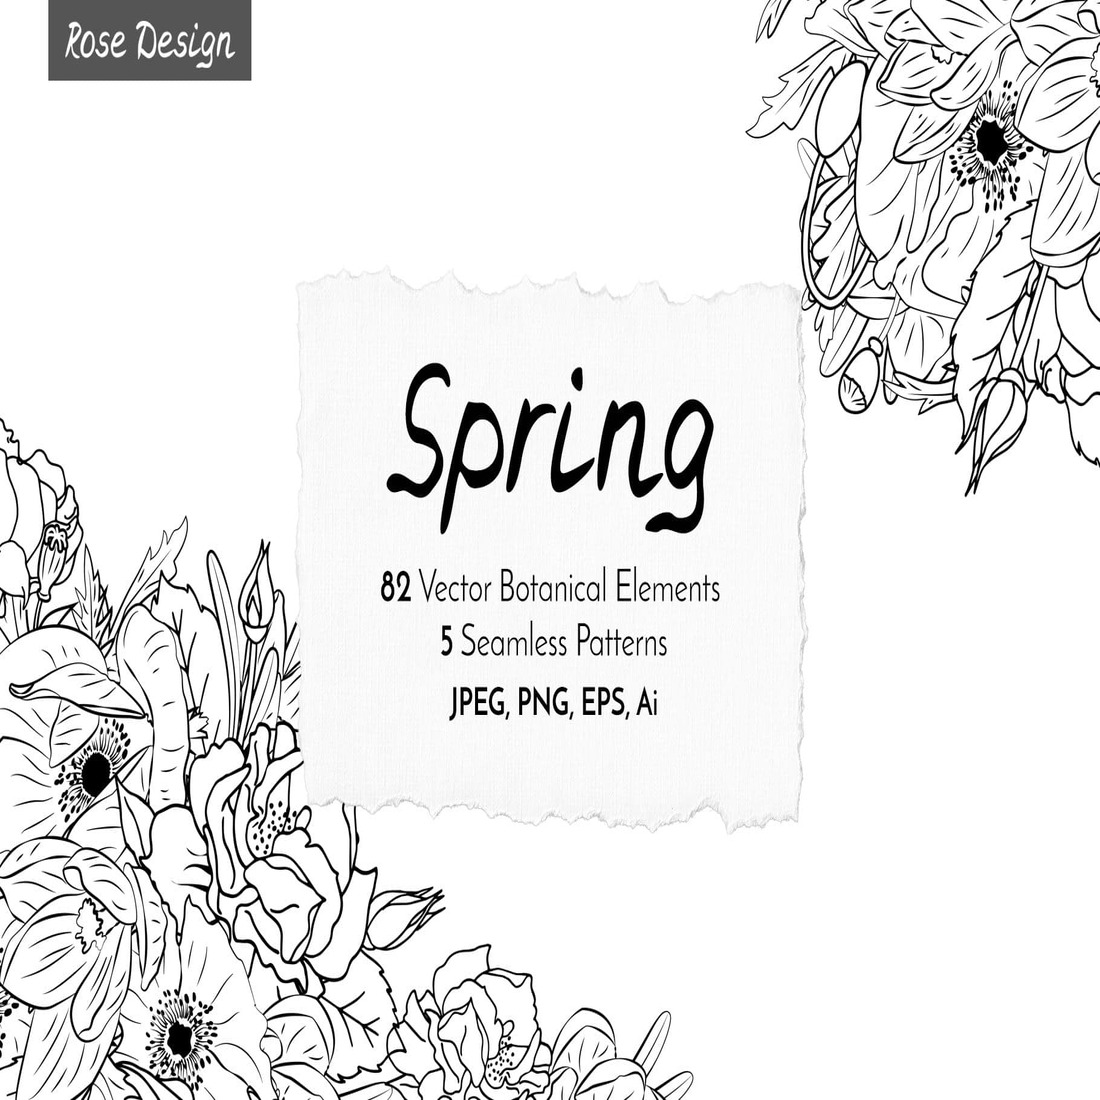 spring poppy crocus rose line art main cover.